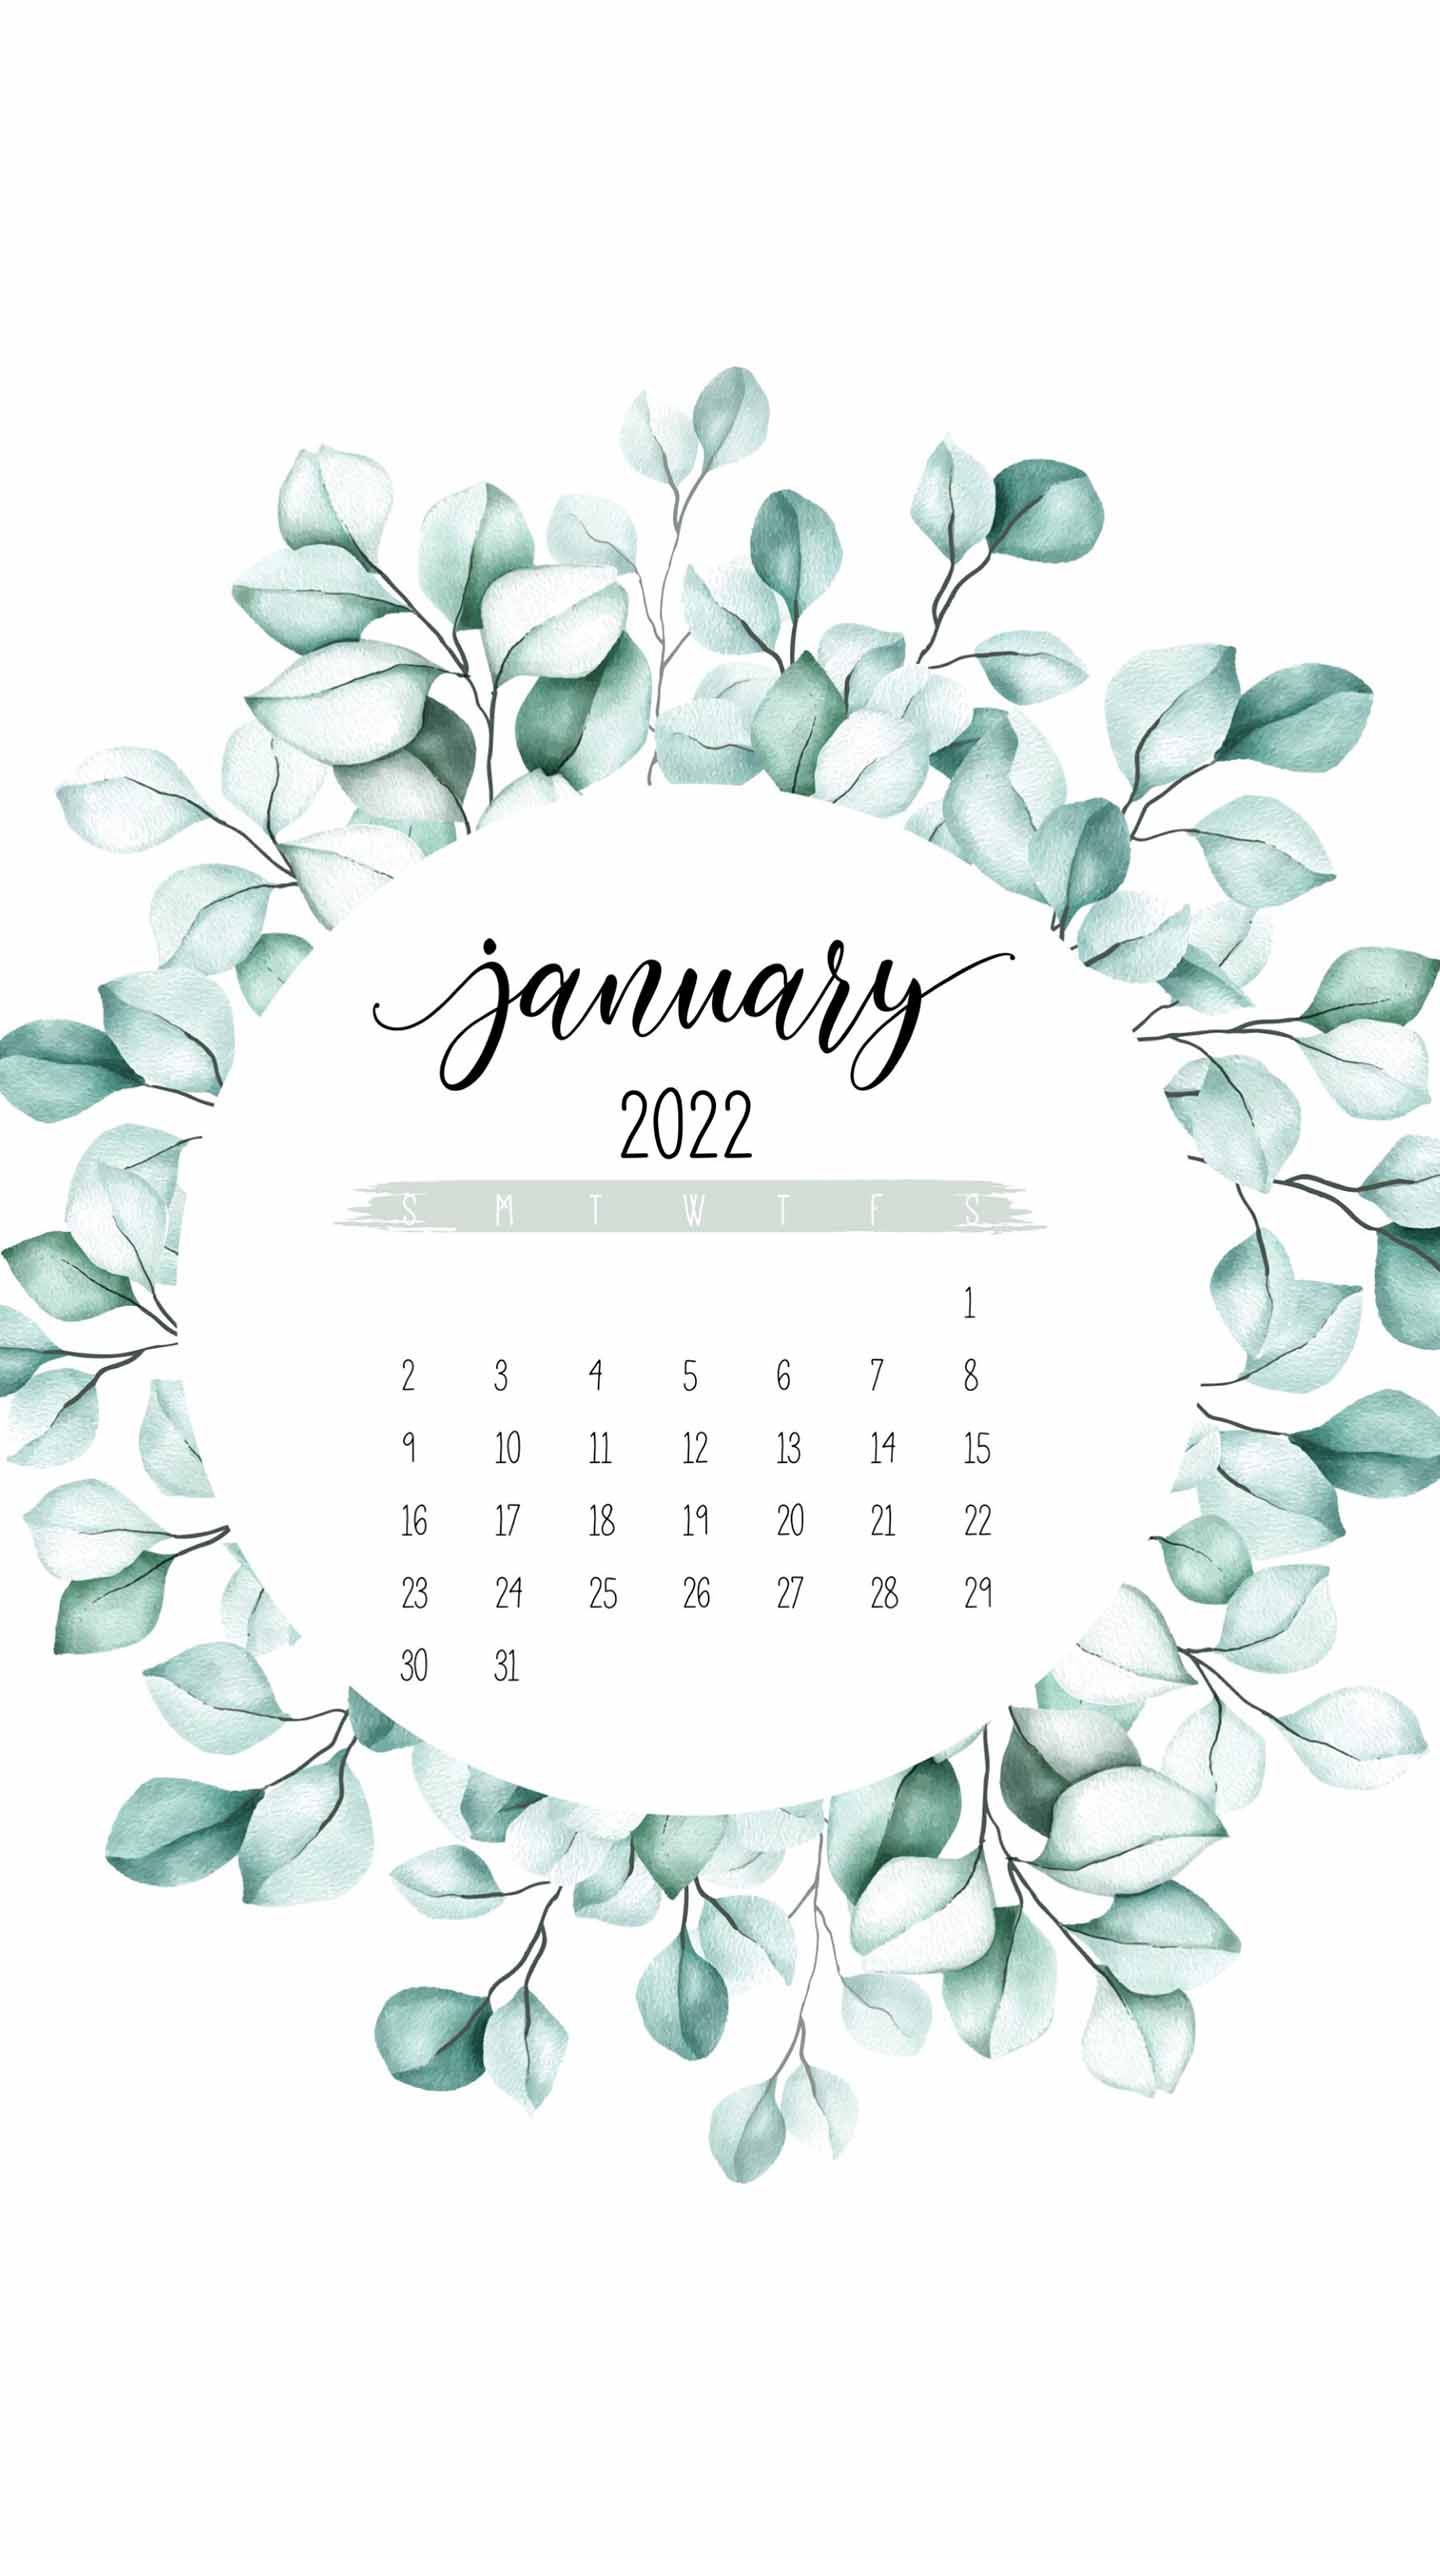 November Calendar Wallpaper 2022 2022 January Calendar Wallpaper - Ixpap